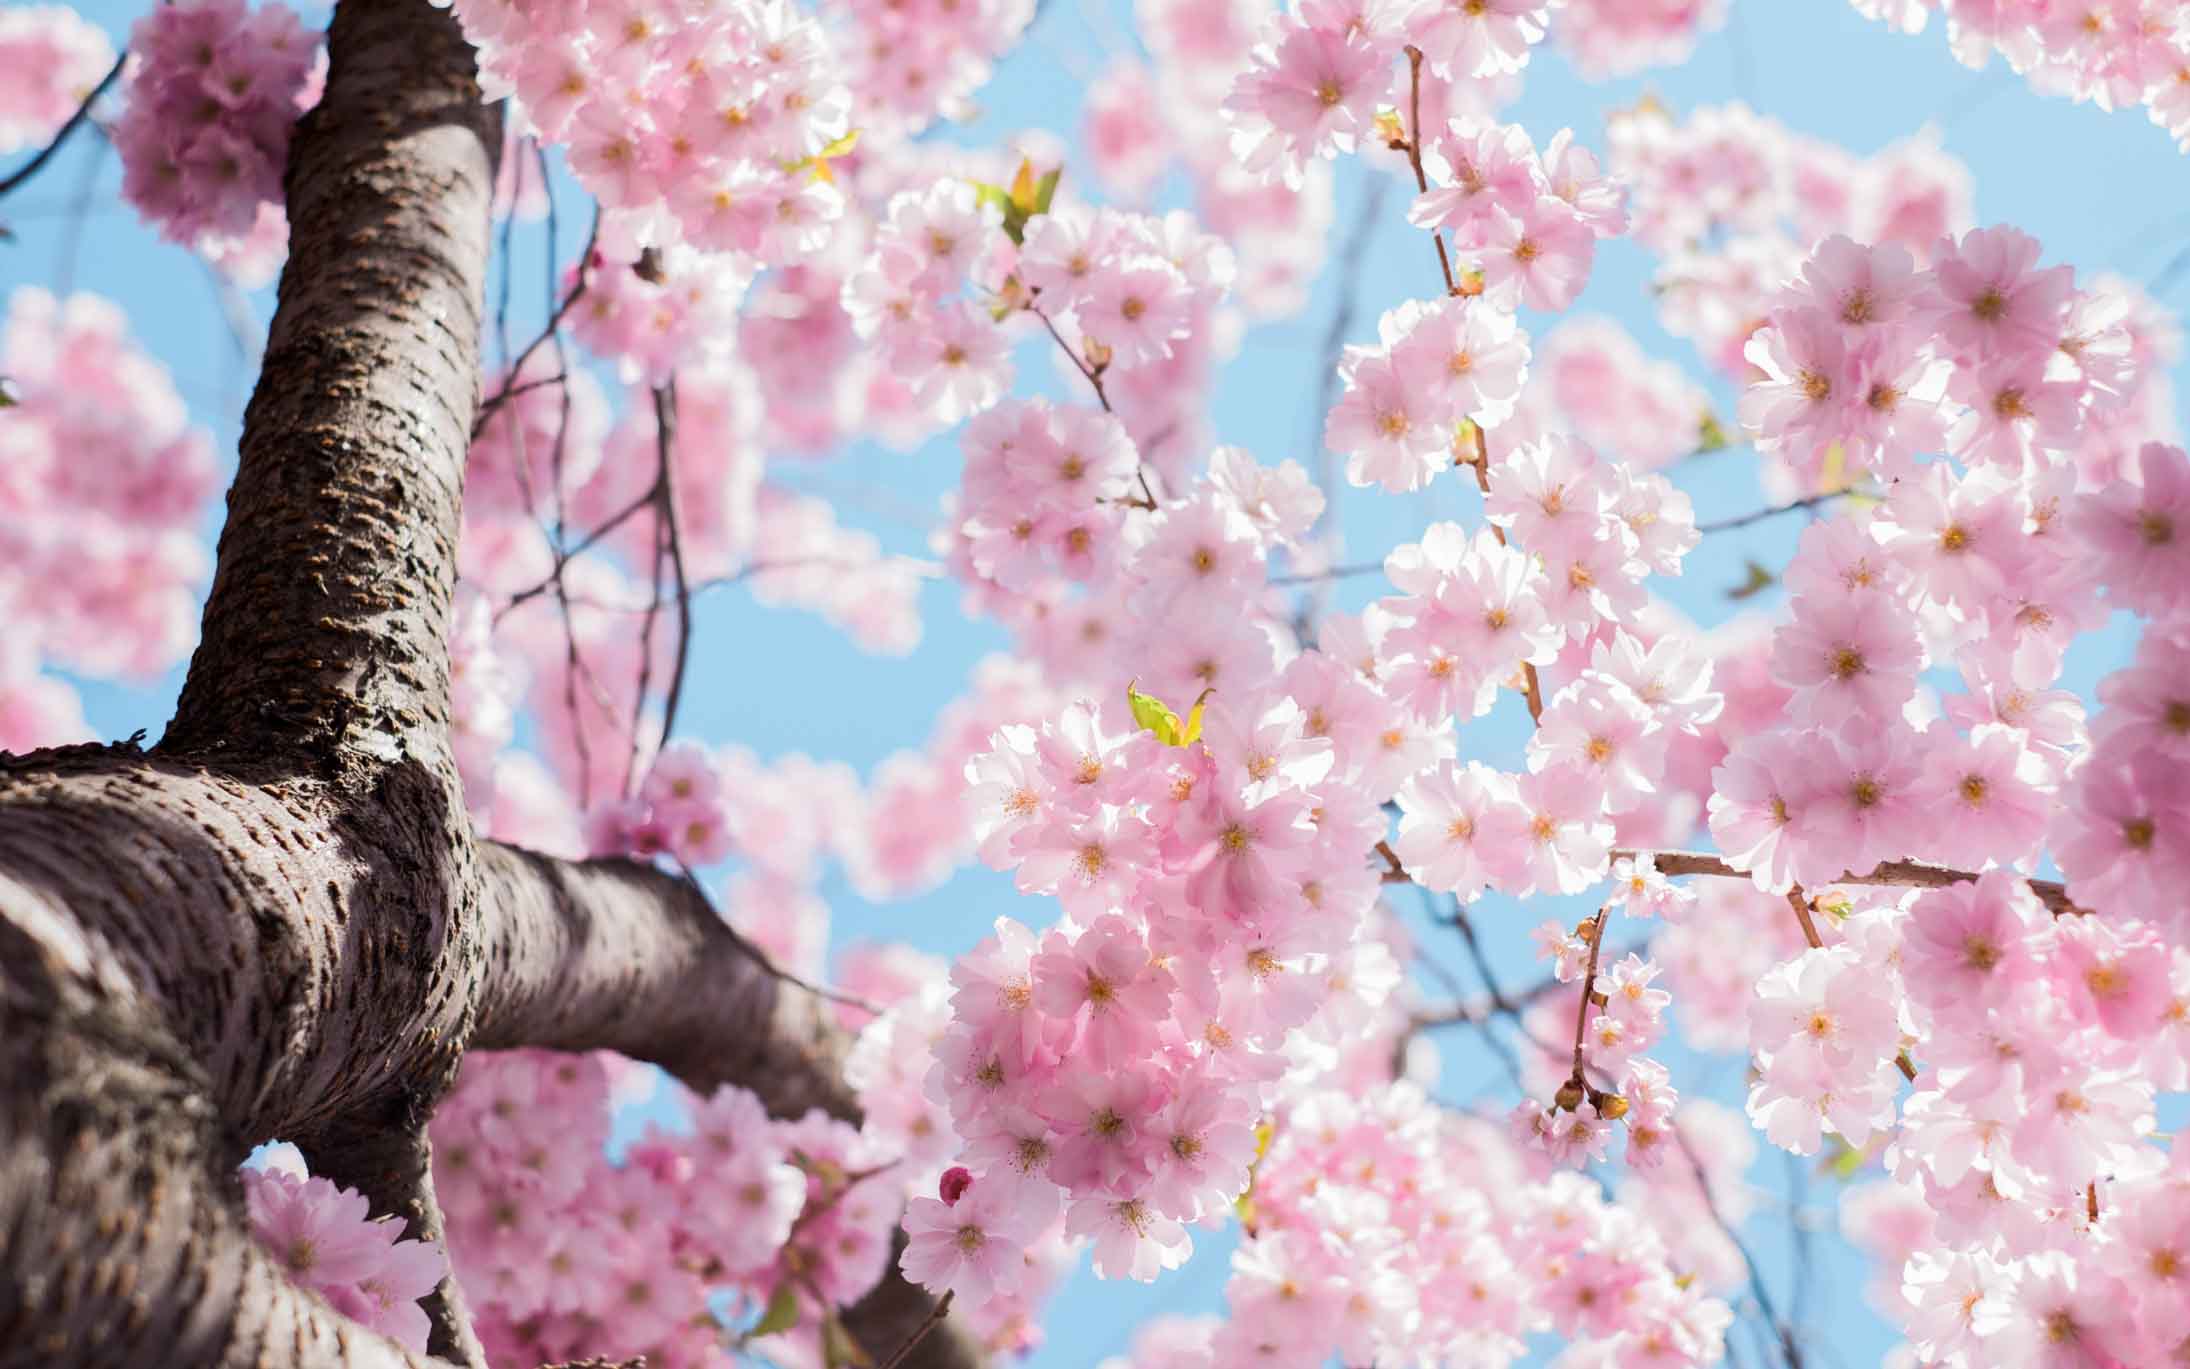 Sakura Japan Guide To Enjoy The Cherry Blossom Festival Spring 2021